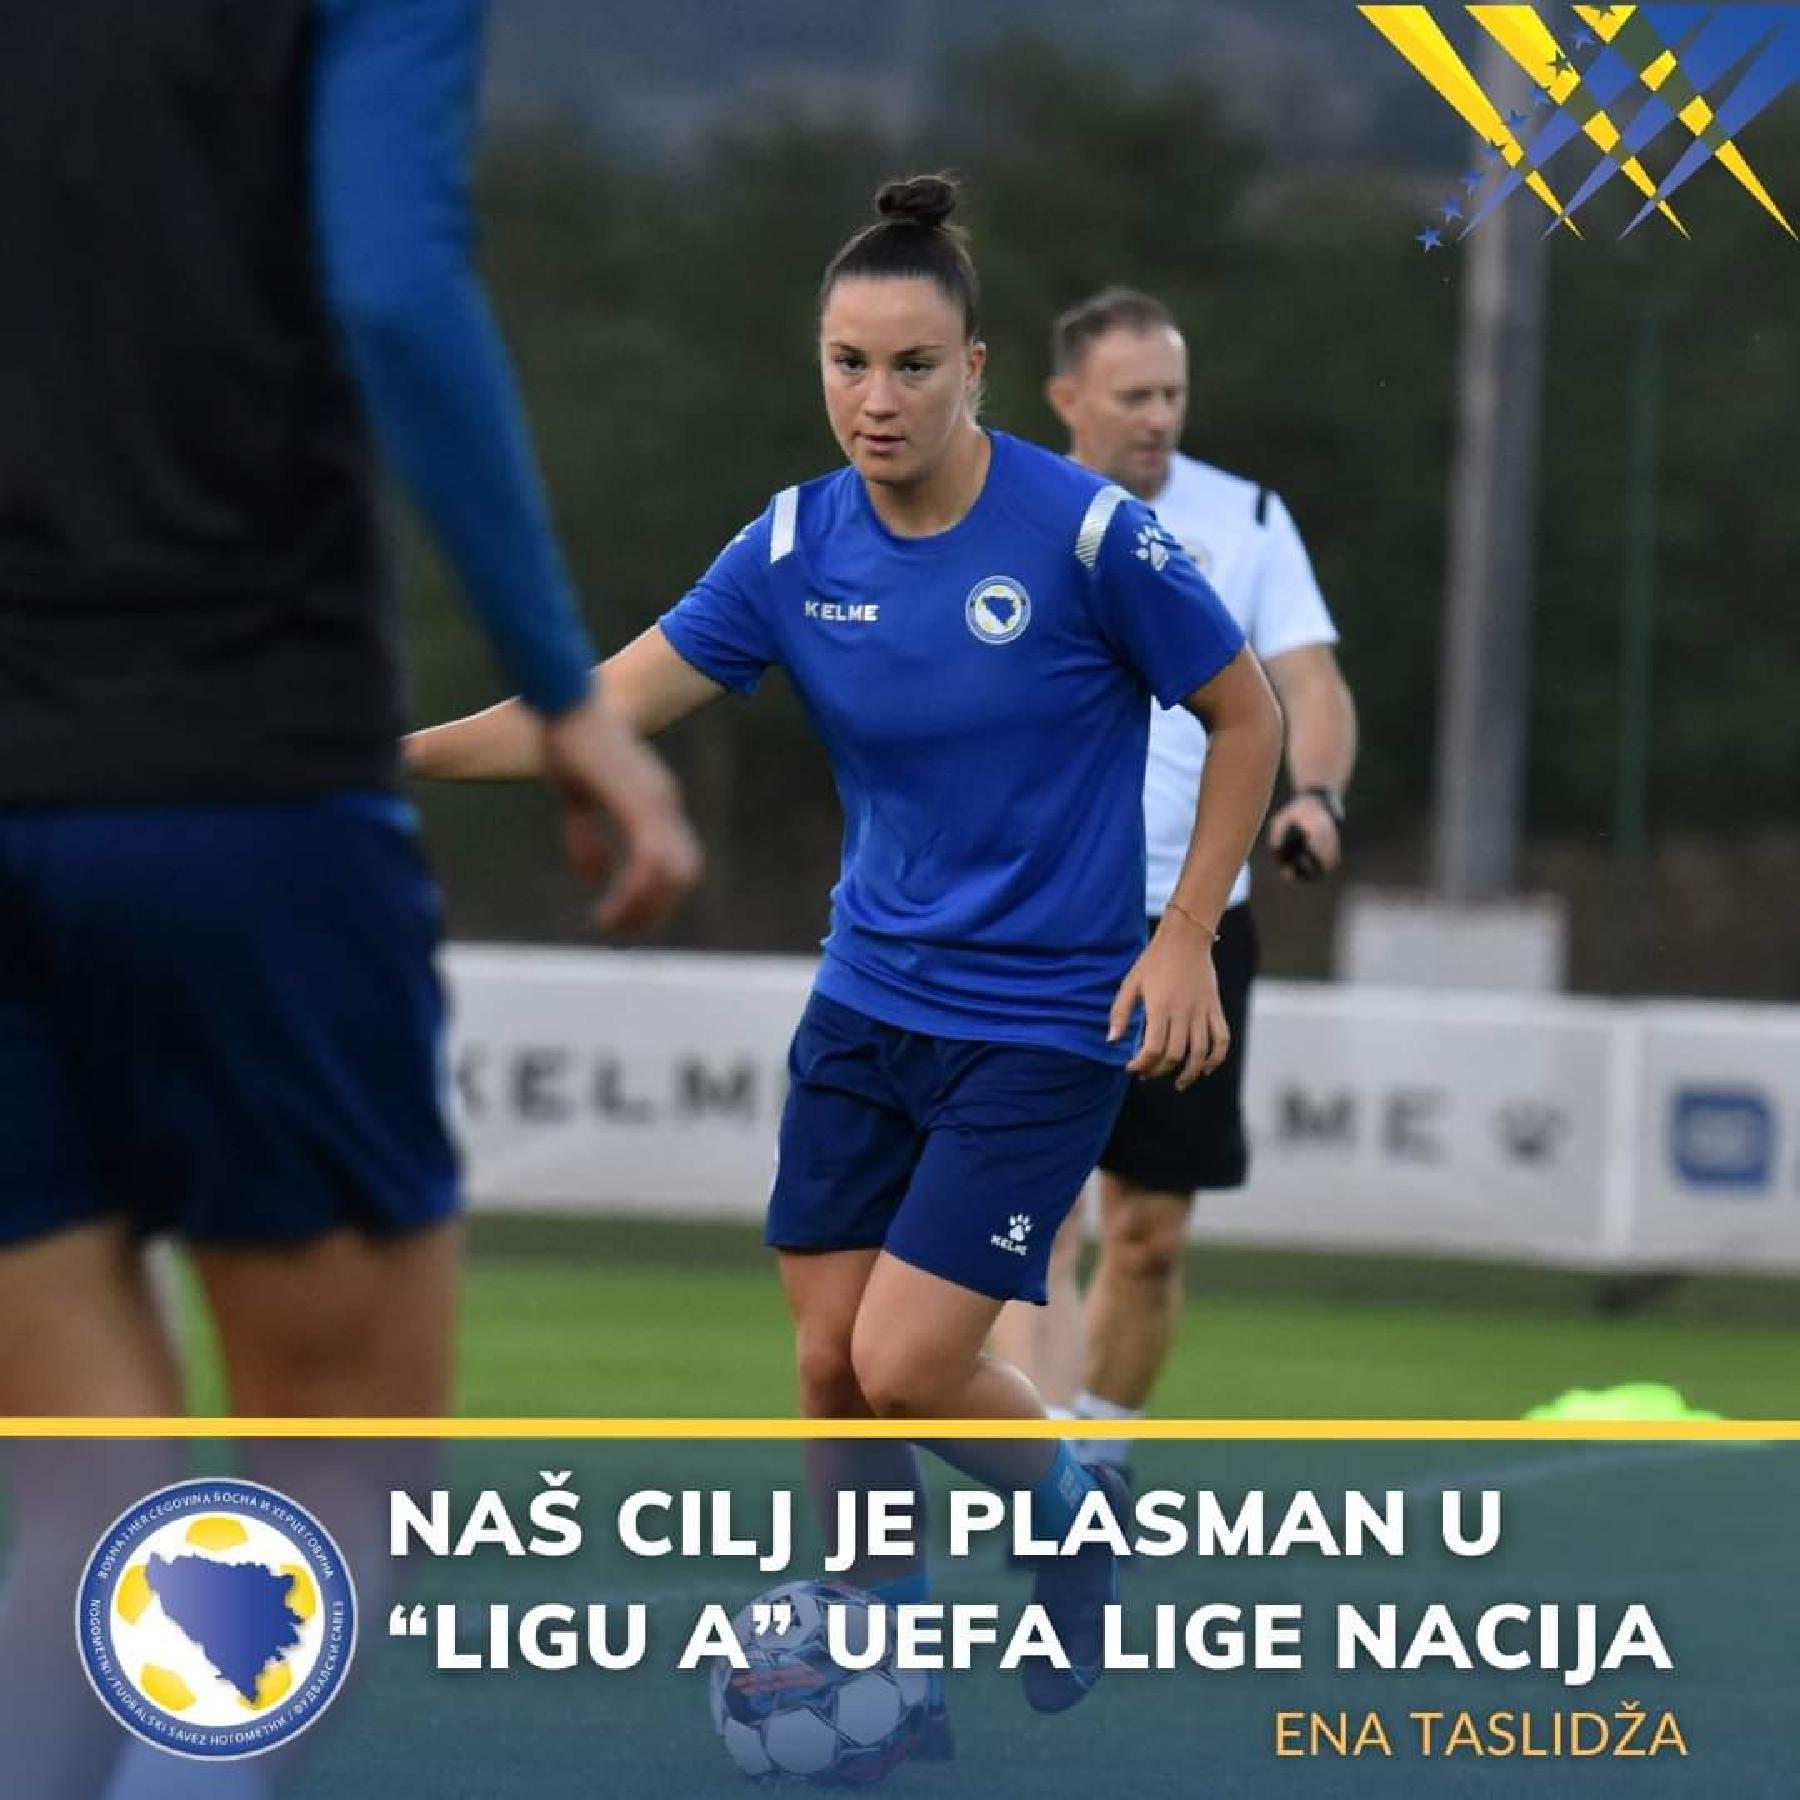 Pozitivno pred utakmicu sa Slovenijom razmišlja i bh. reprezentativka Ena Taslidža: